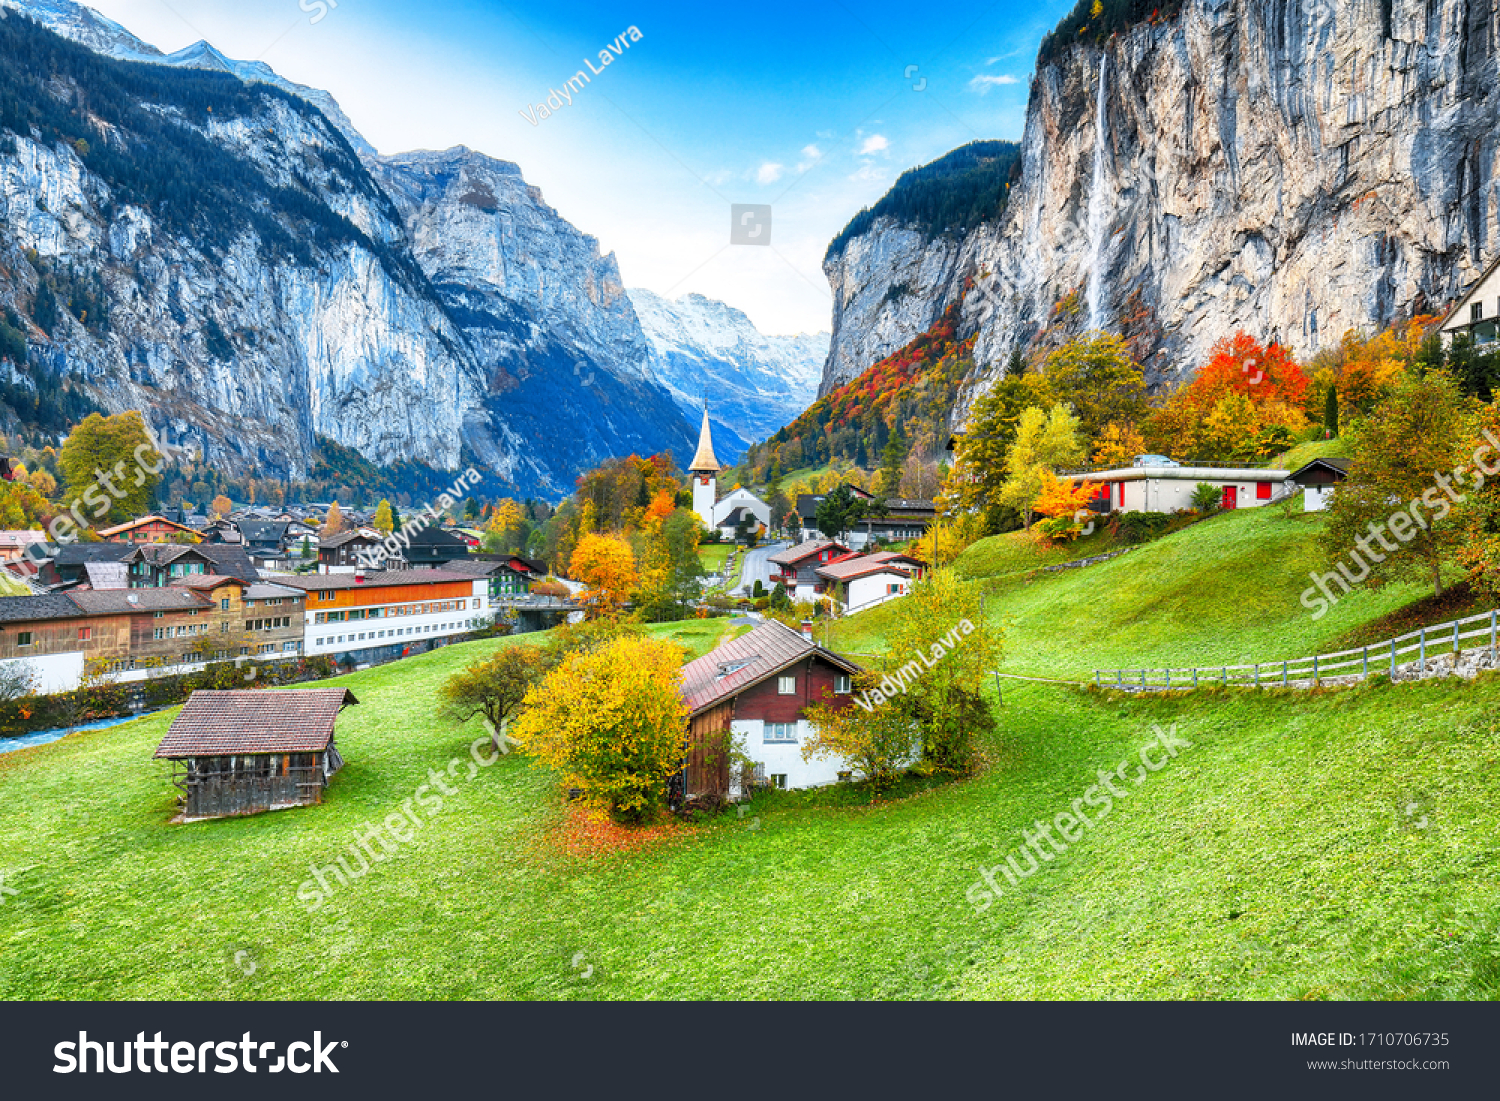 Amazing autumn landscape of touristic alpine village Lauterbrunnen with famous church and Staubbach waterfall. Location: Lauterbrunnen village, Berner Oberland, Switzerland, Europe. #1710706735